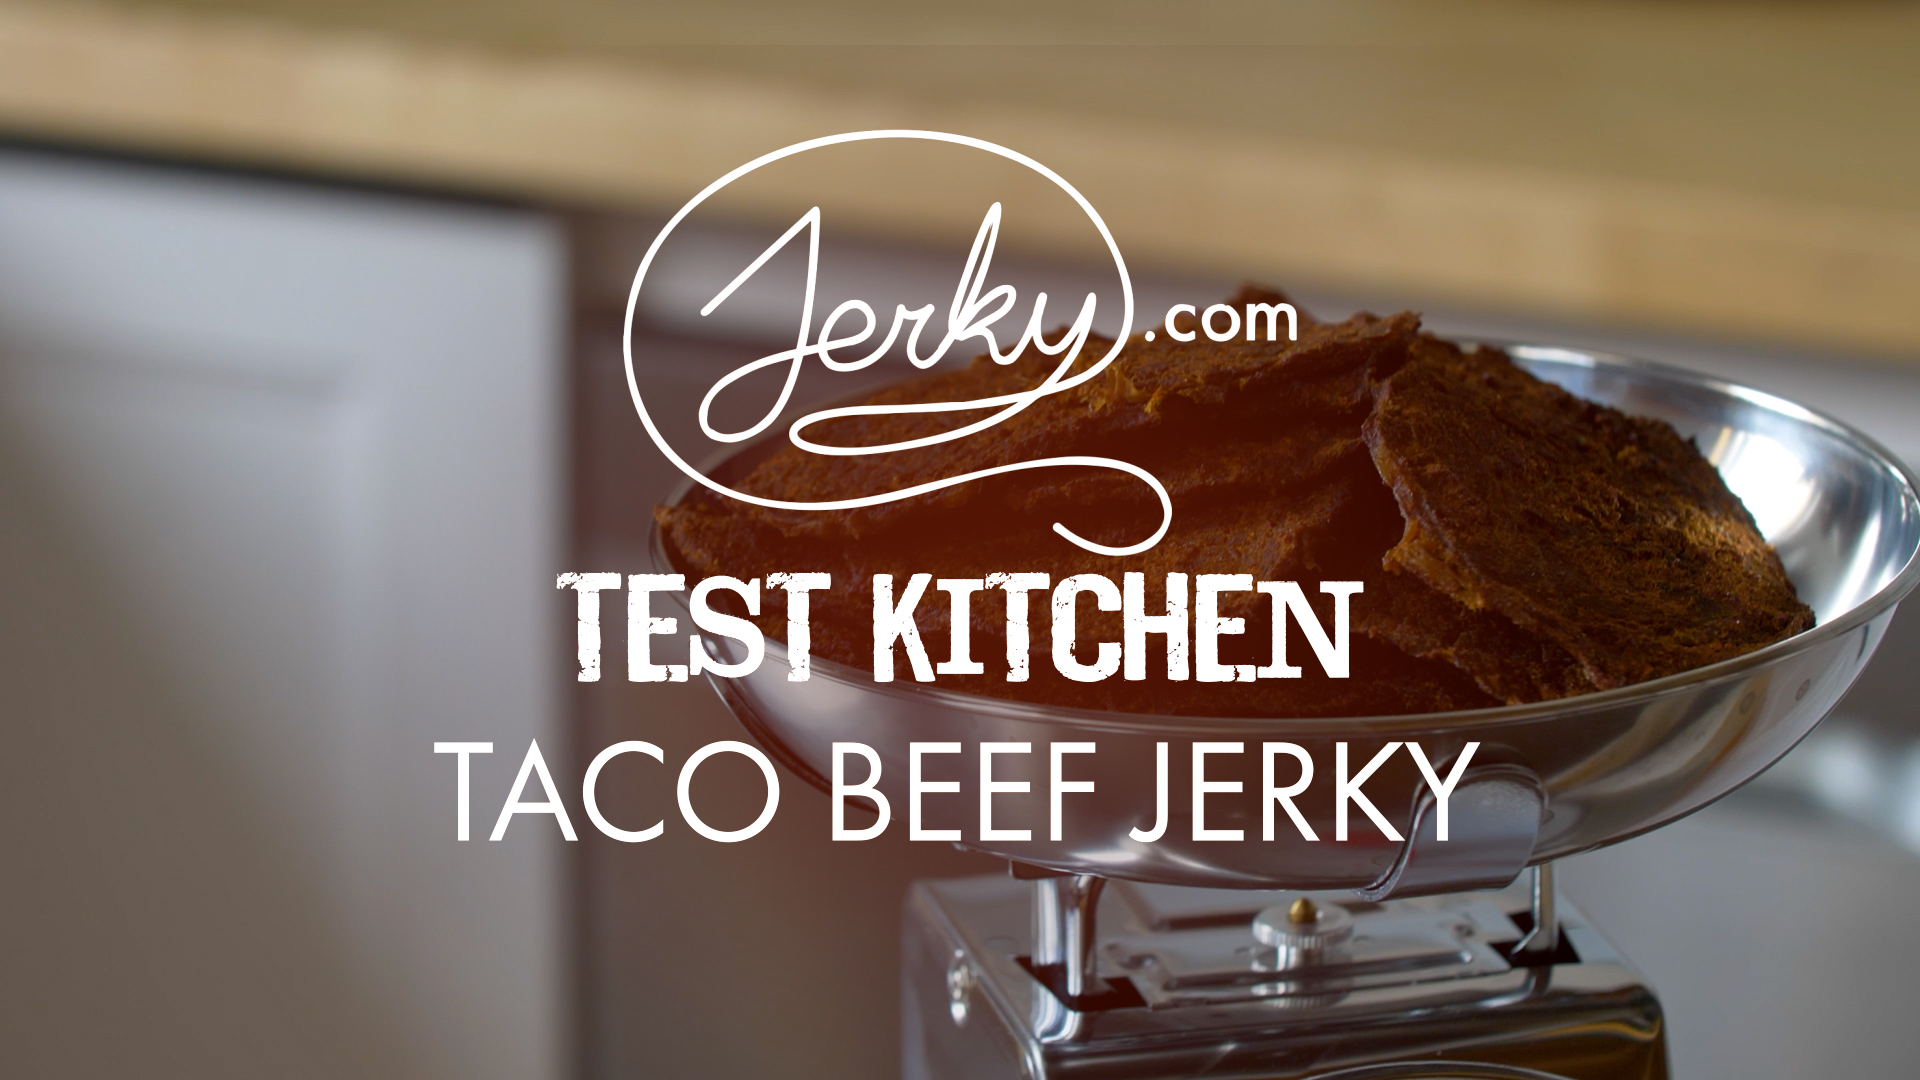 Image of Taco Beef Jerky